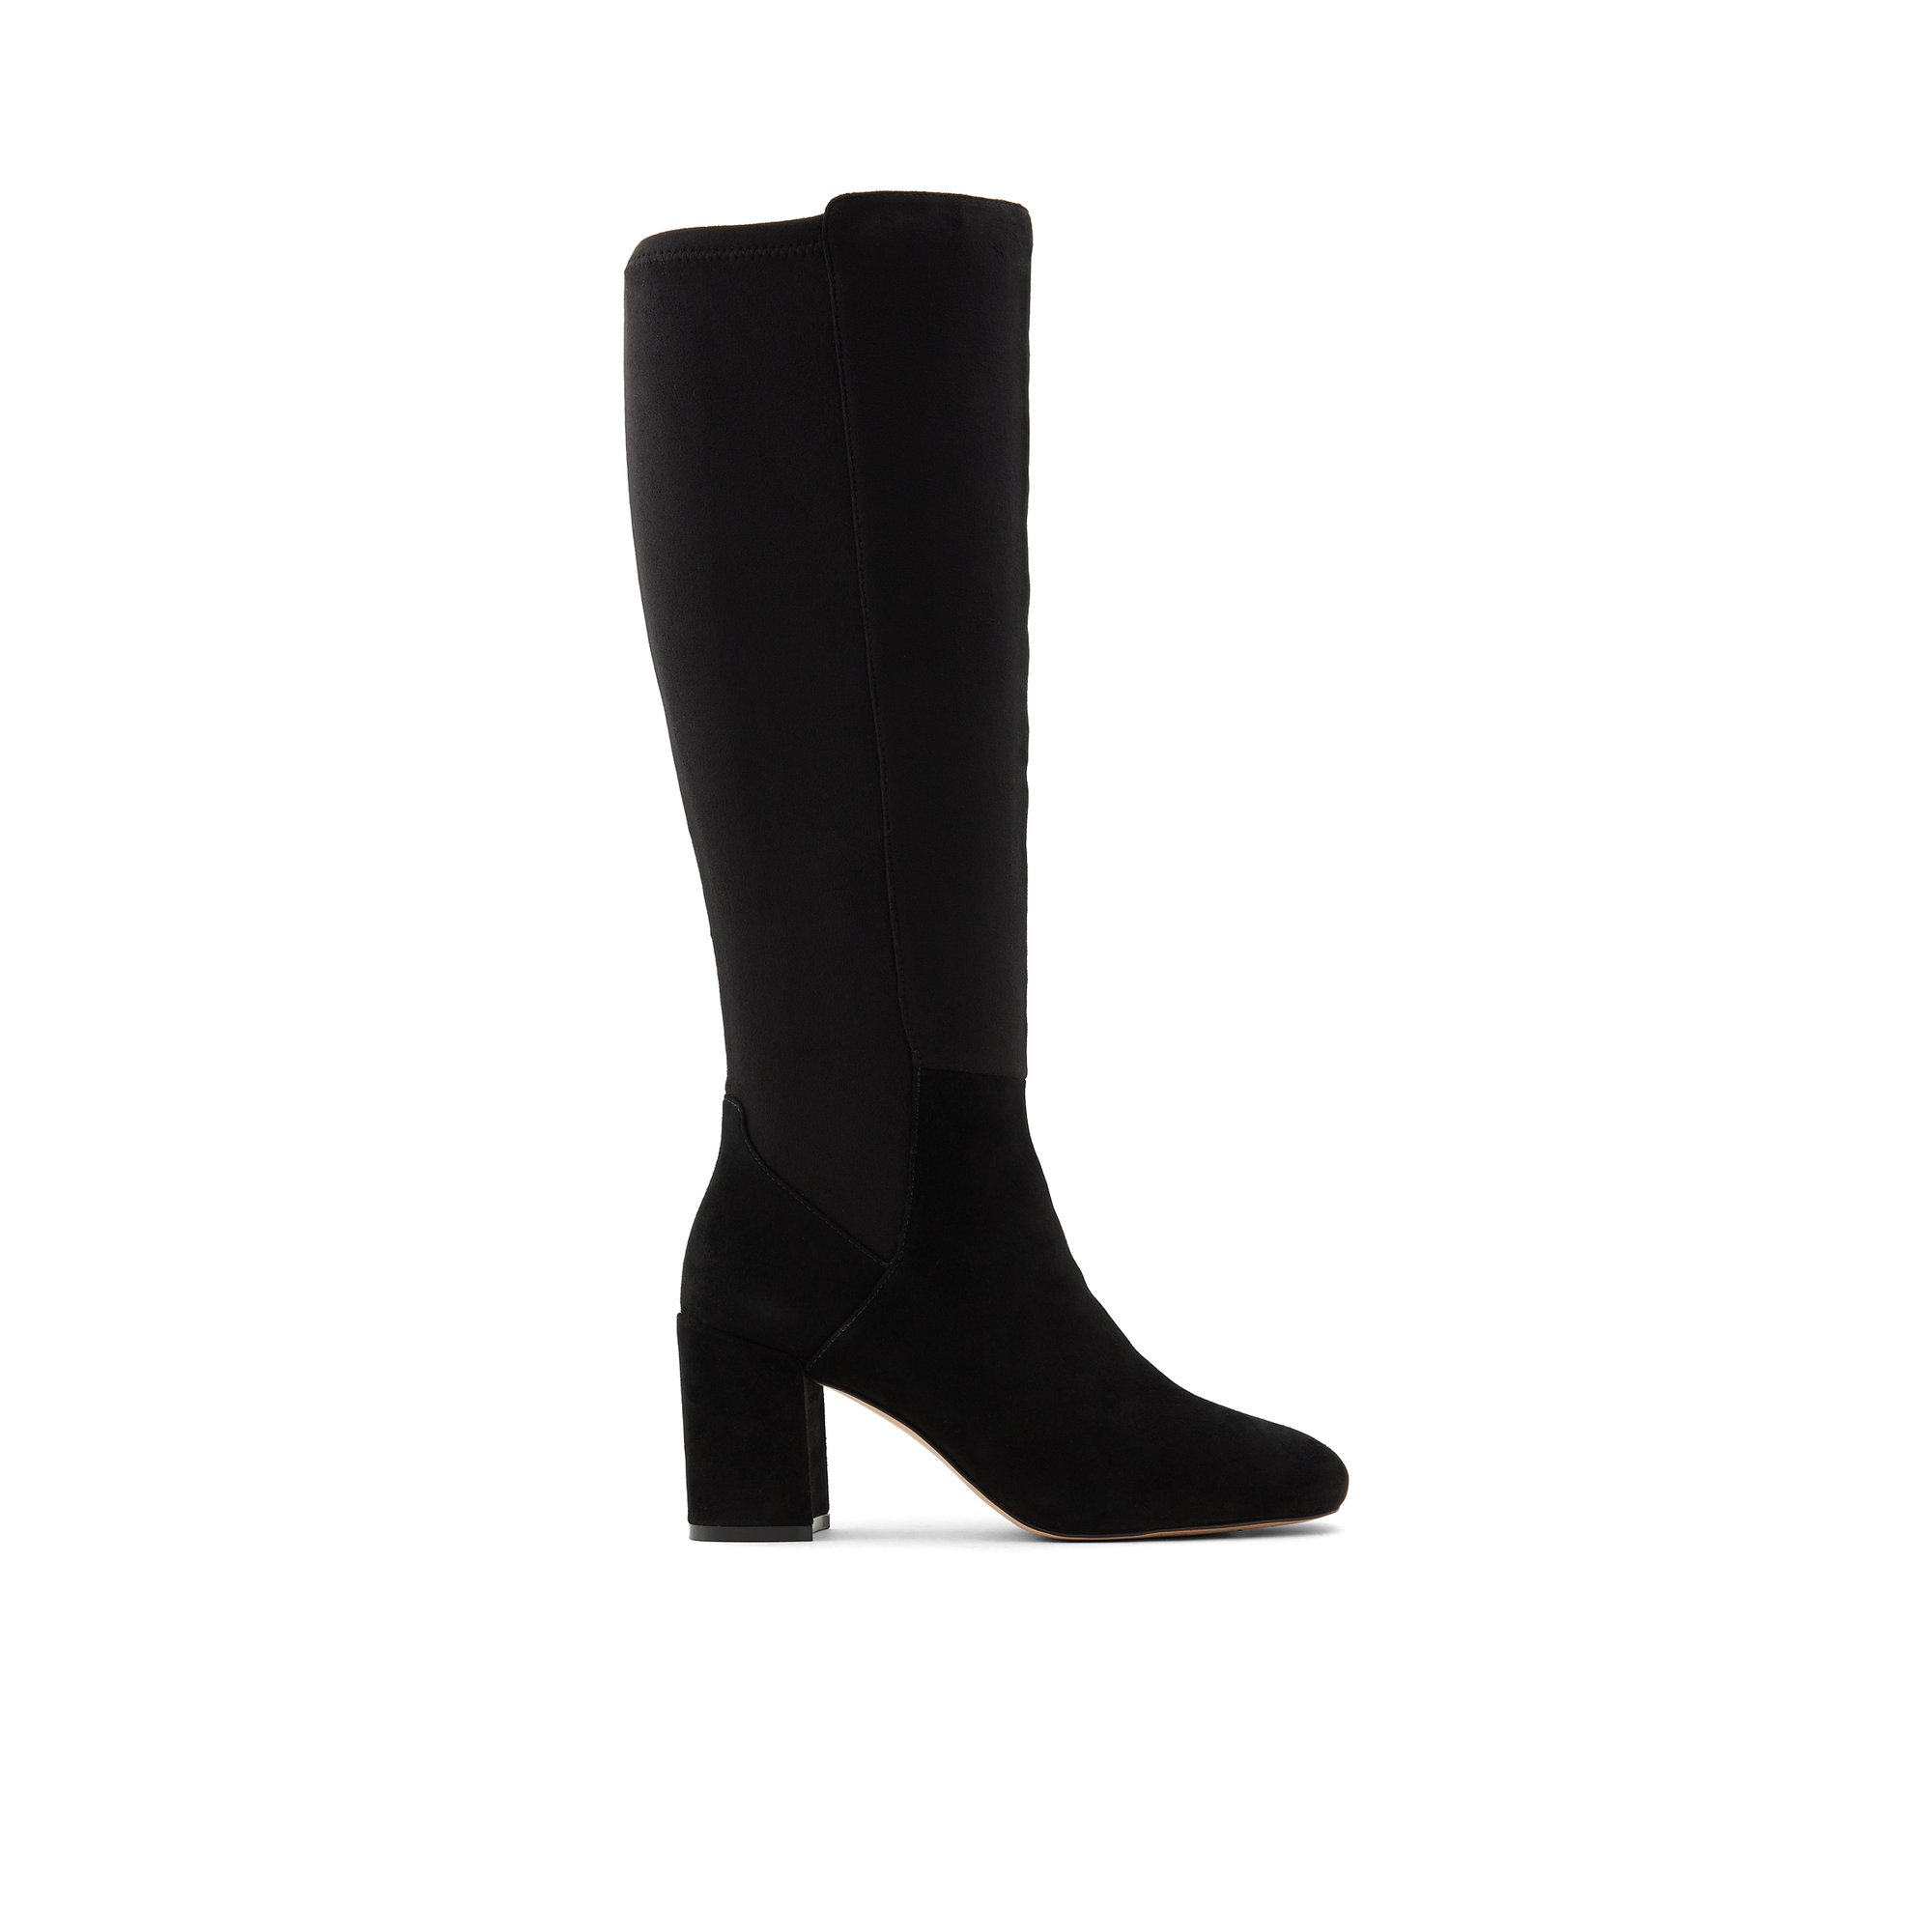 ALDO Satori - Womens Boots Dress - Black, Size 5 by Aldo